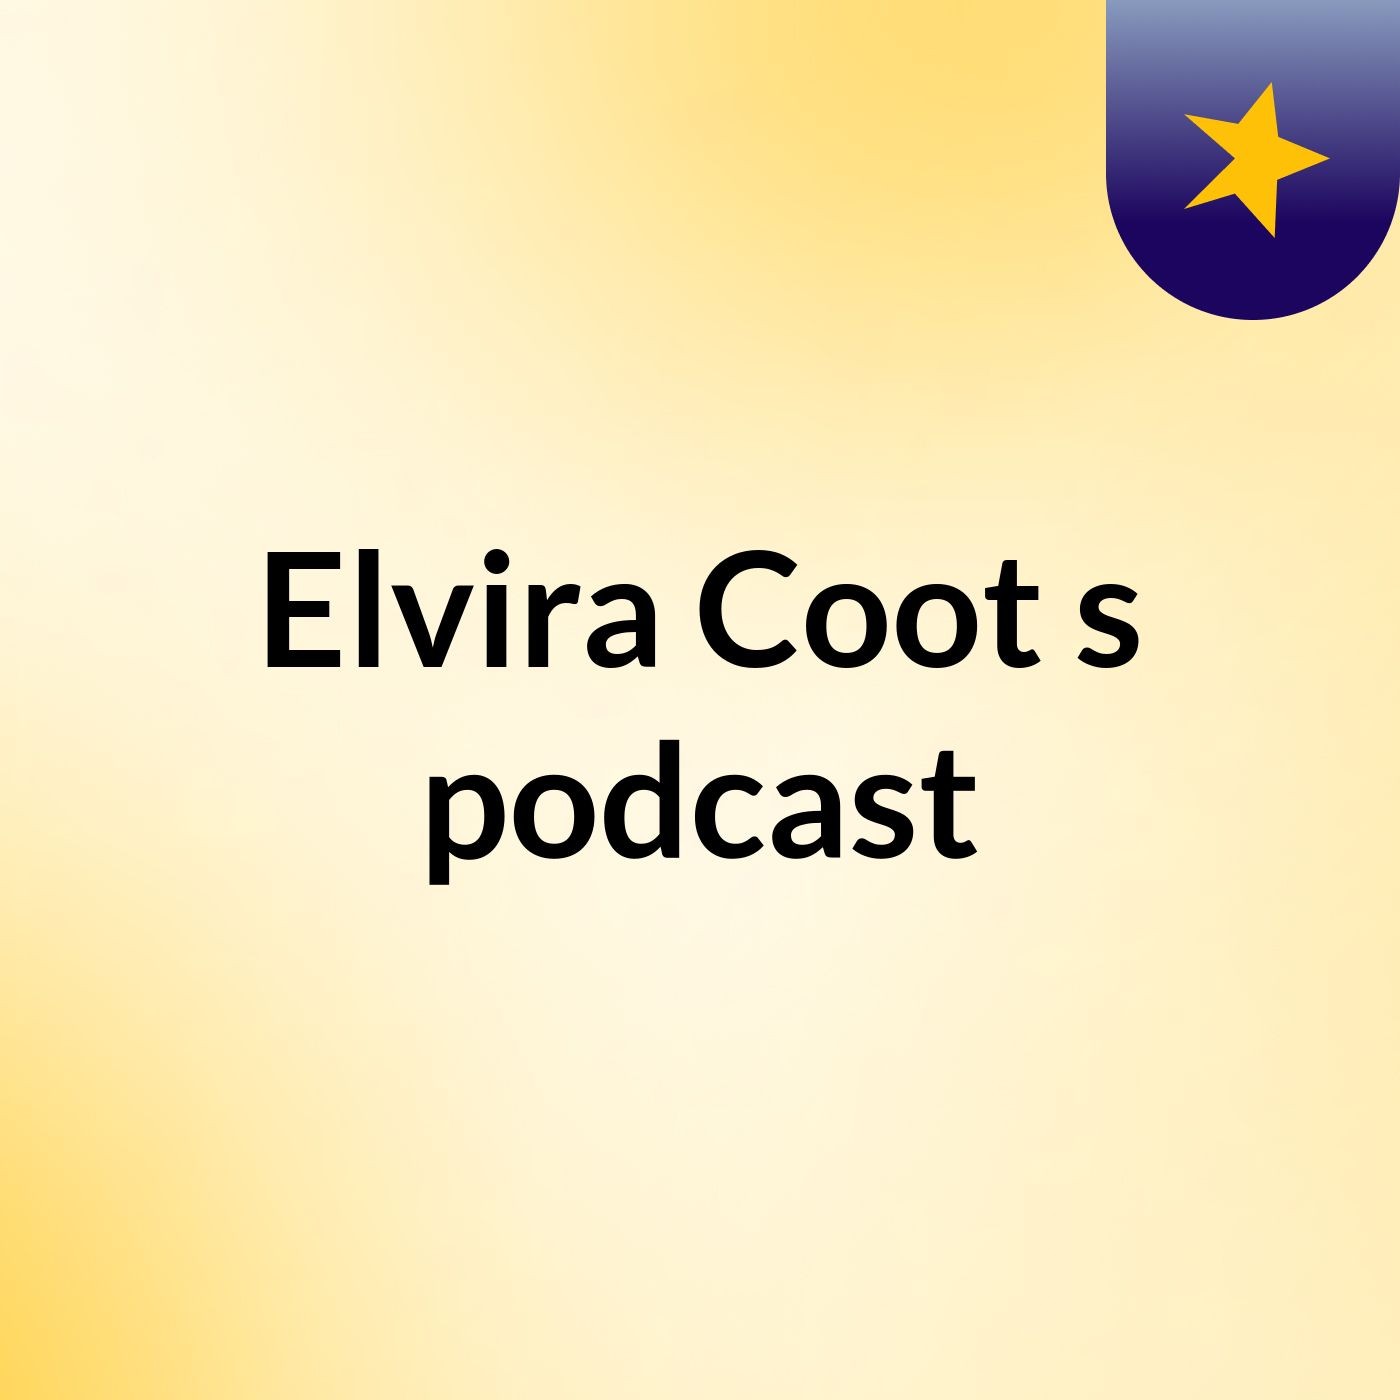 Episode 15 - Elvira Coot's podcast